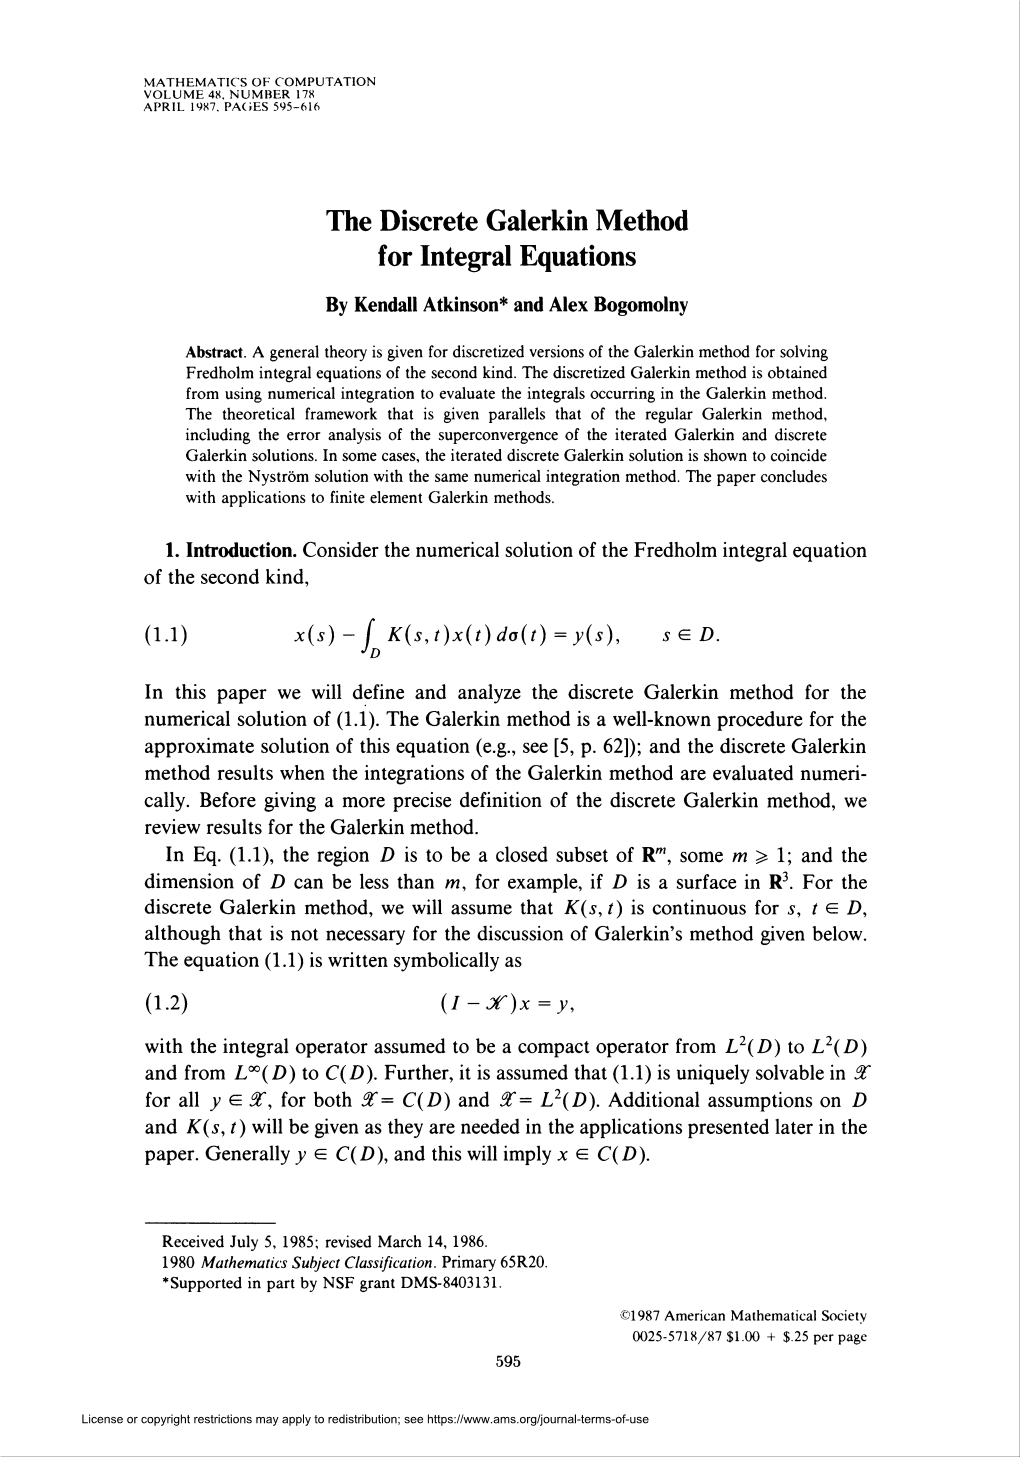 The Discrete Galerkin Method for Integral Equations